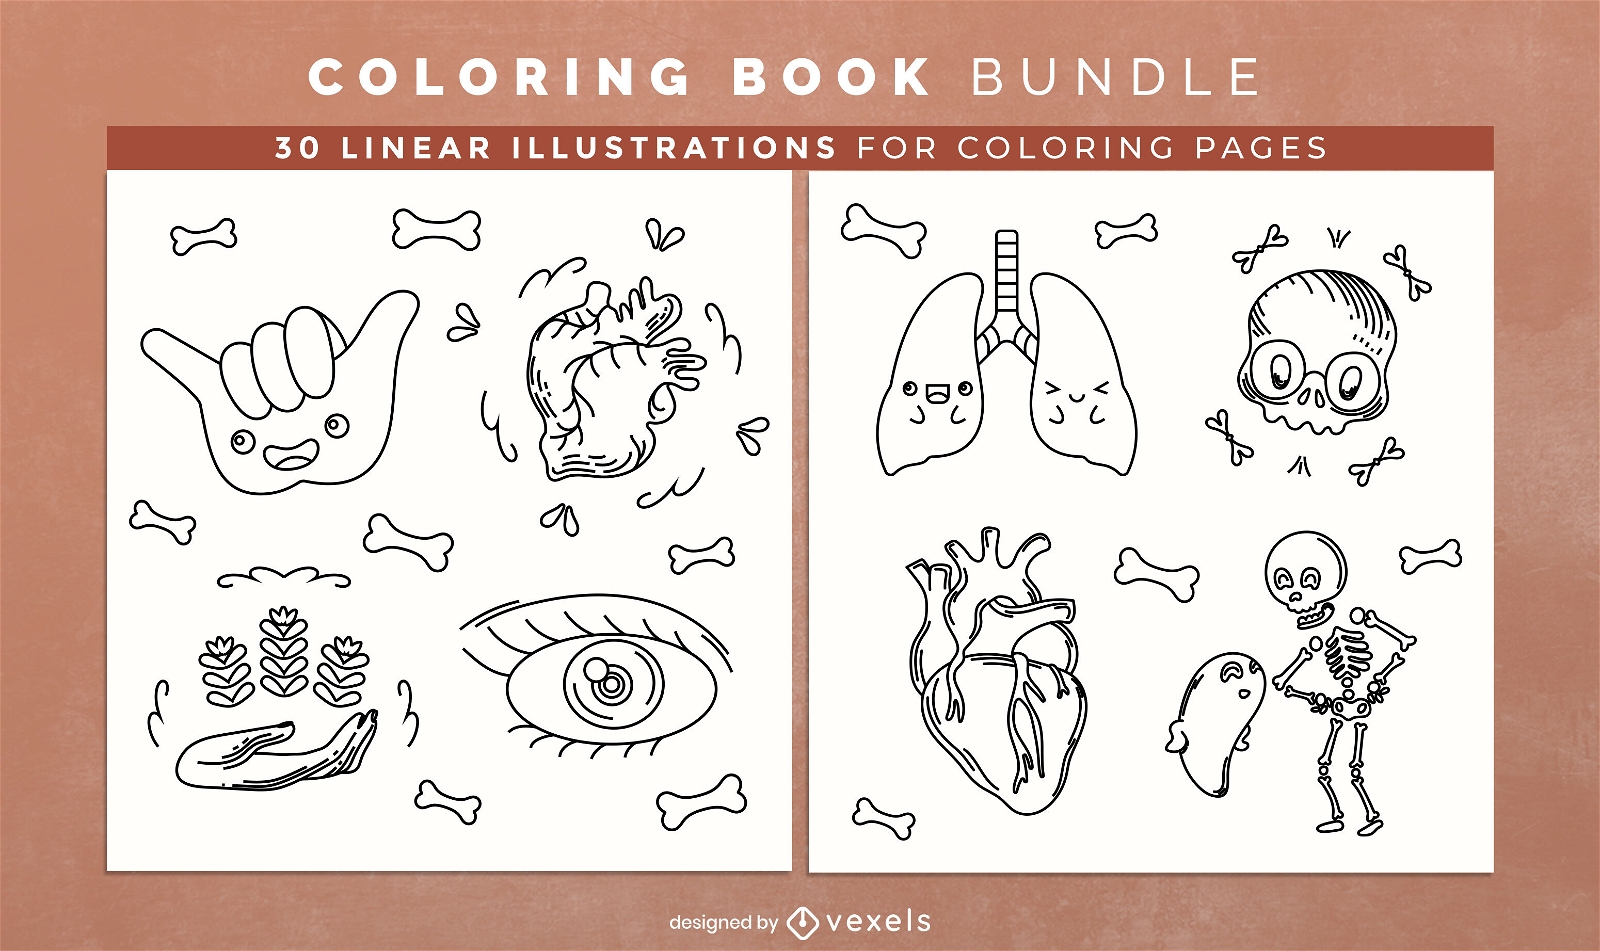 Human anatomy coloring book design